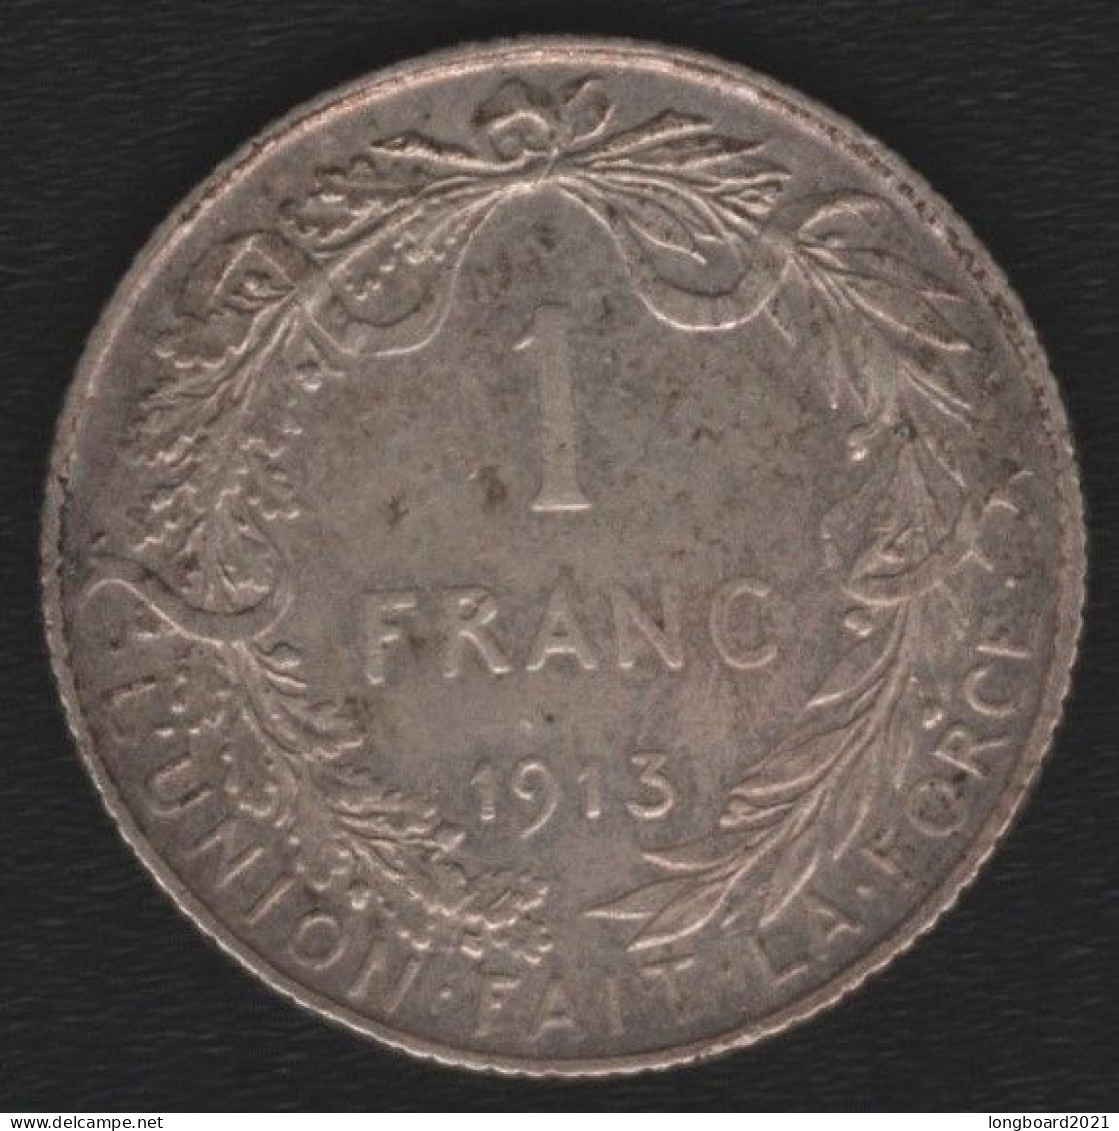 BELGIUM - 1 FRANC 1913 French -SILVER- - 1 Frank